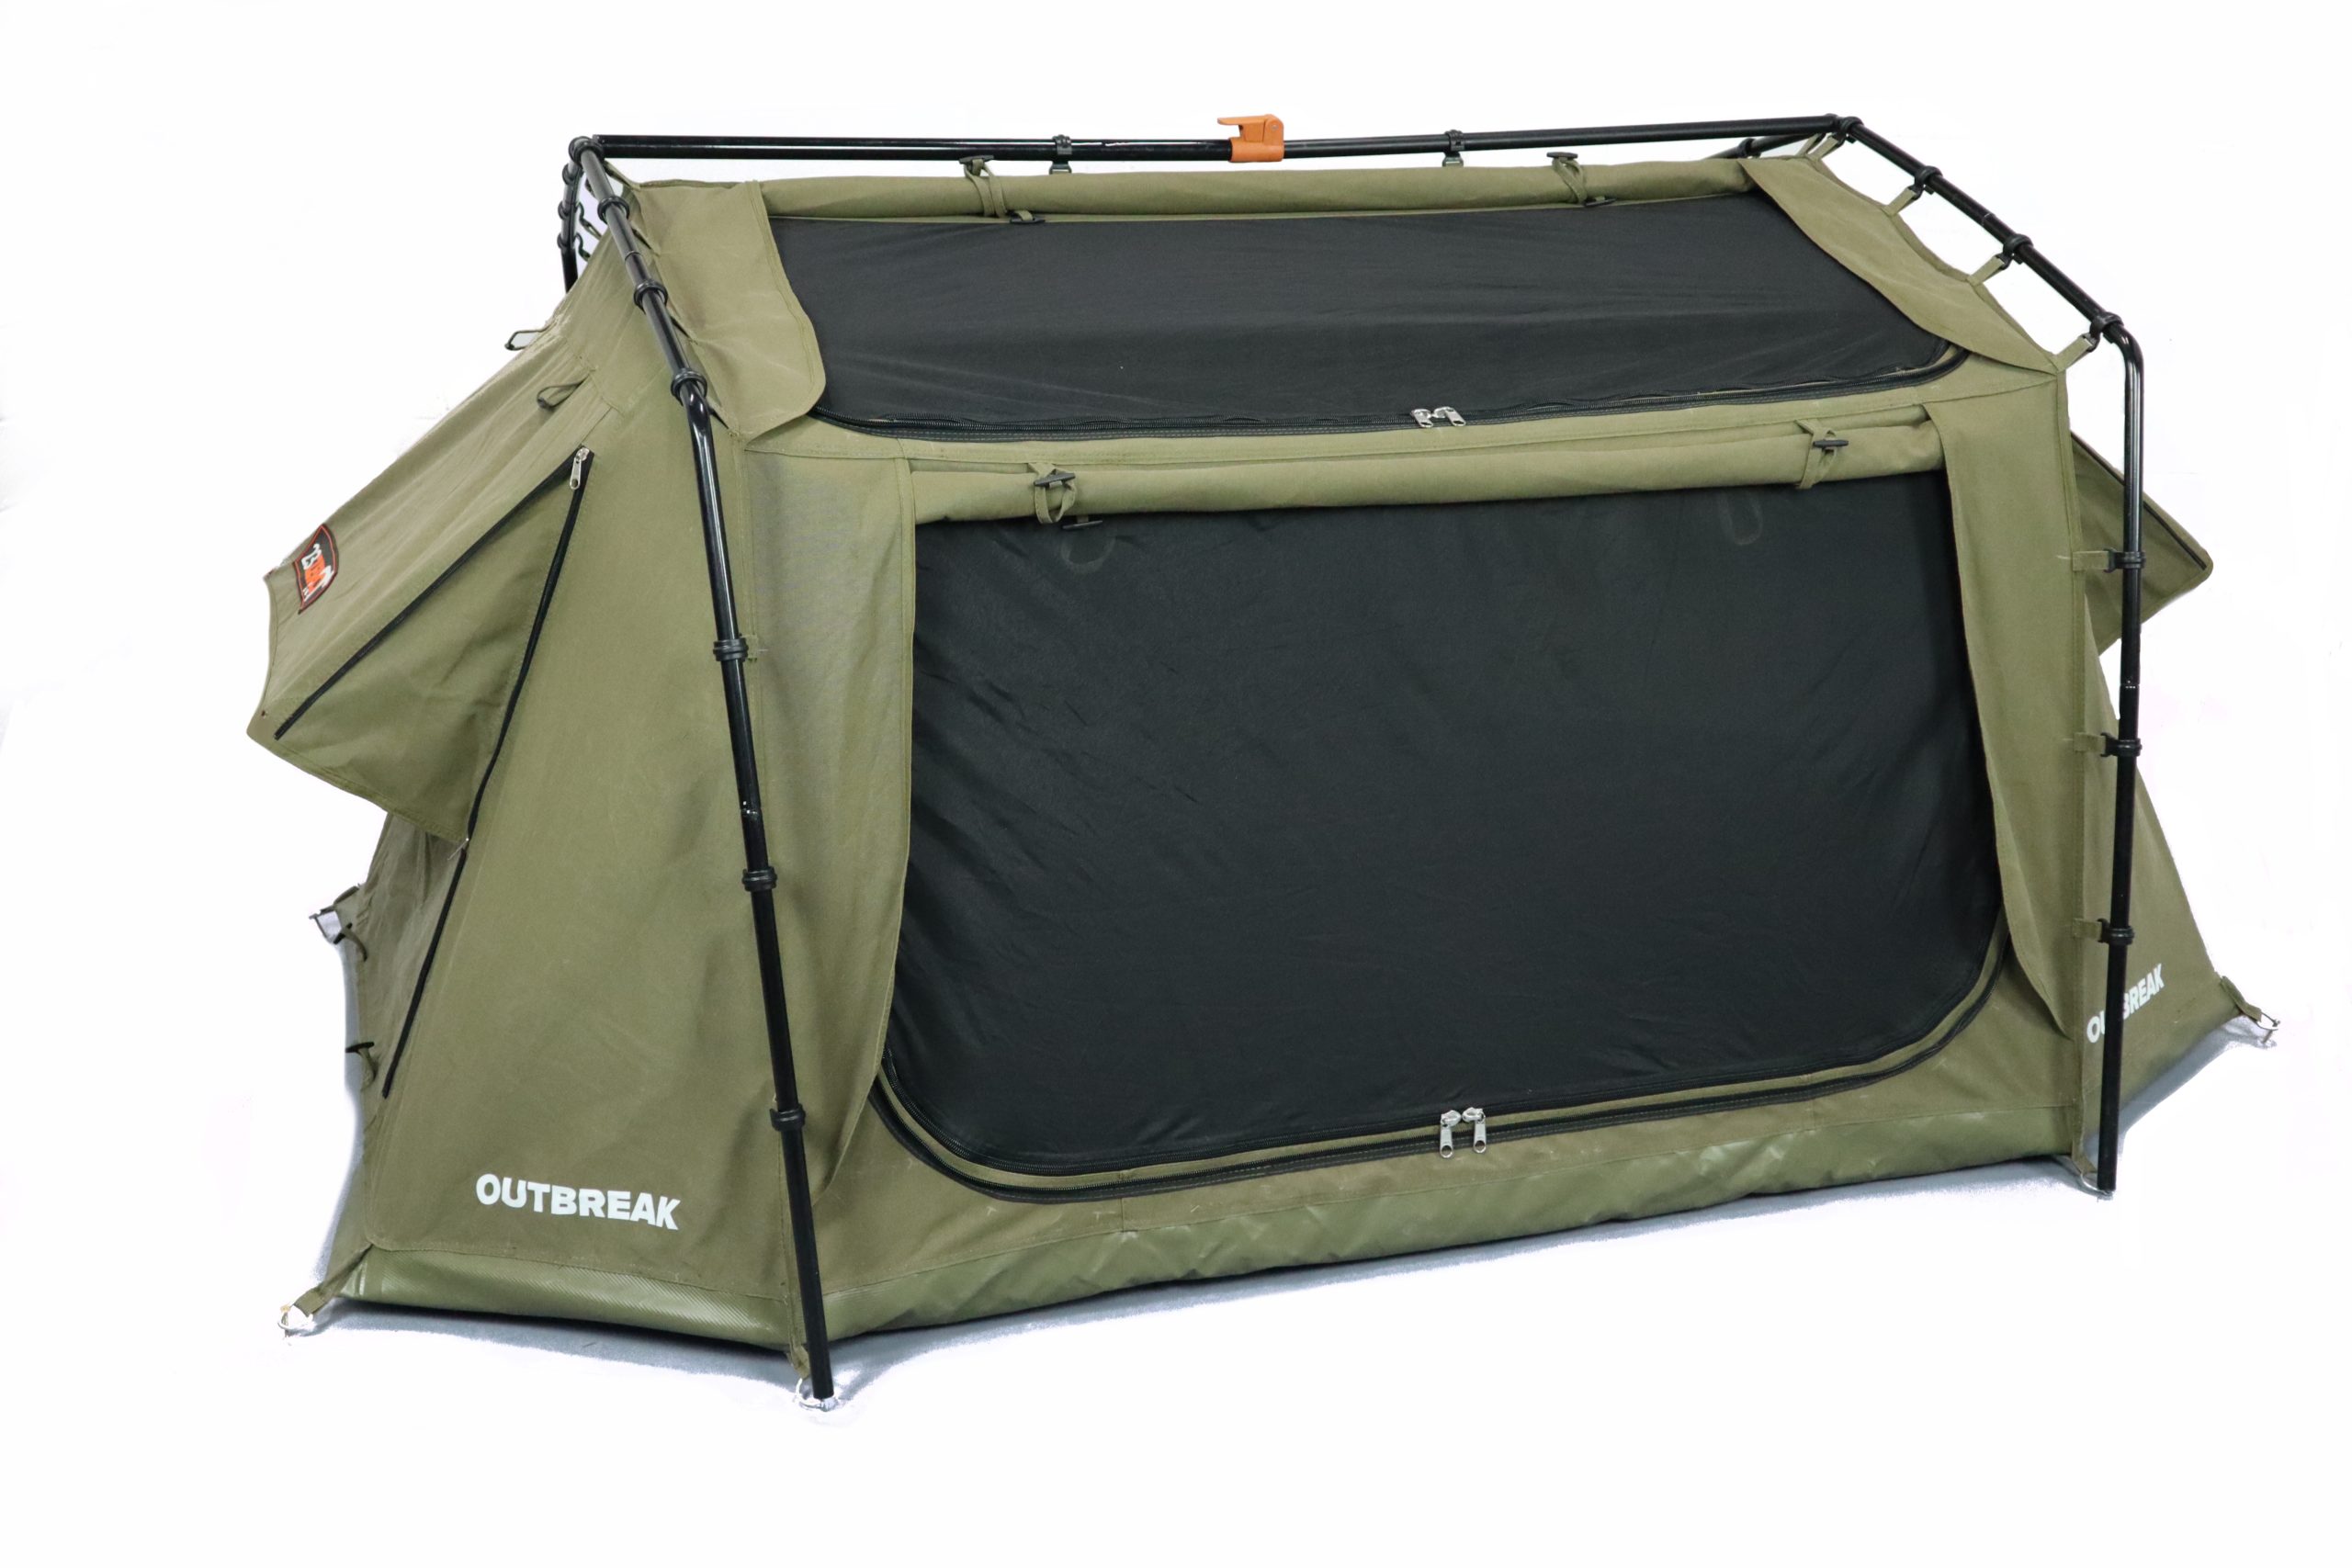 Outbreak 1550 - 23ZERO Australia | Roof Top Tents Camping Online